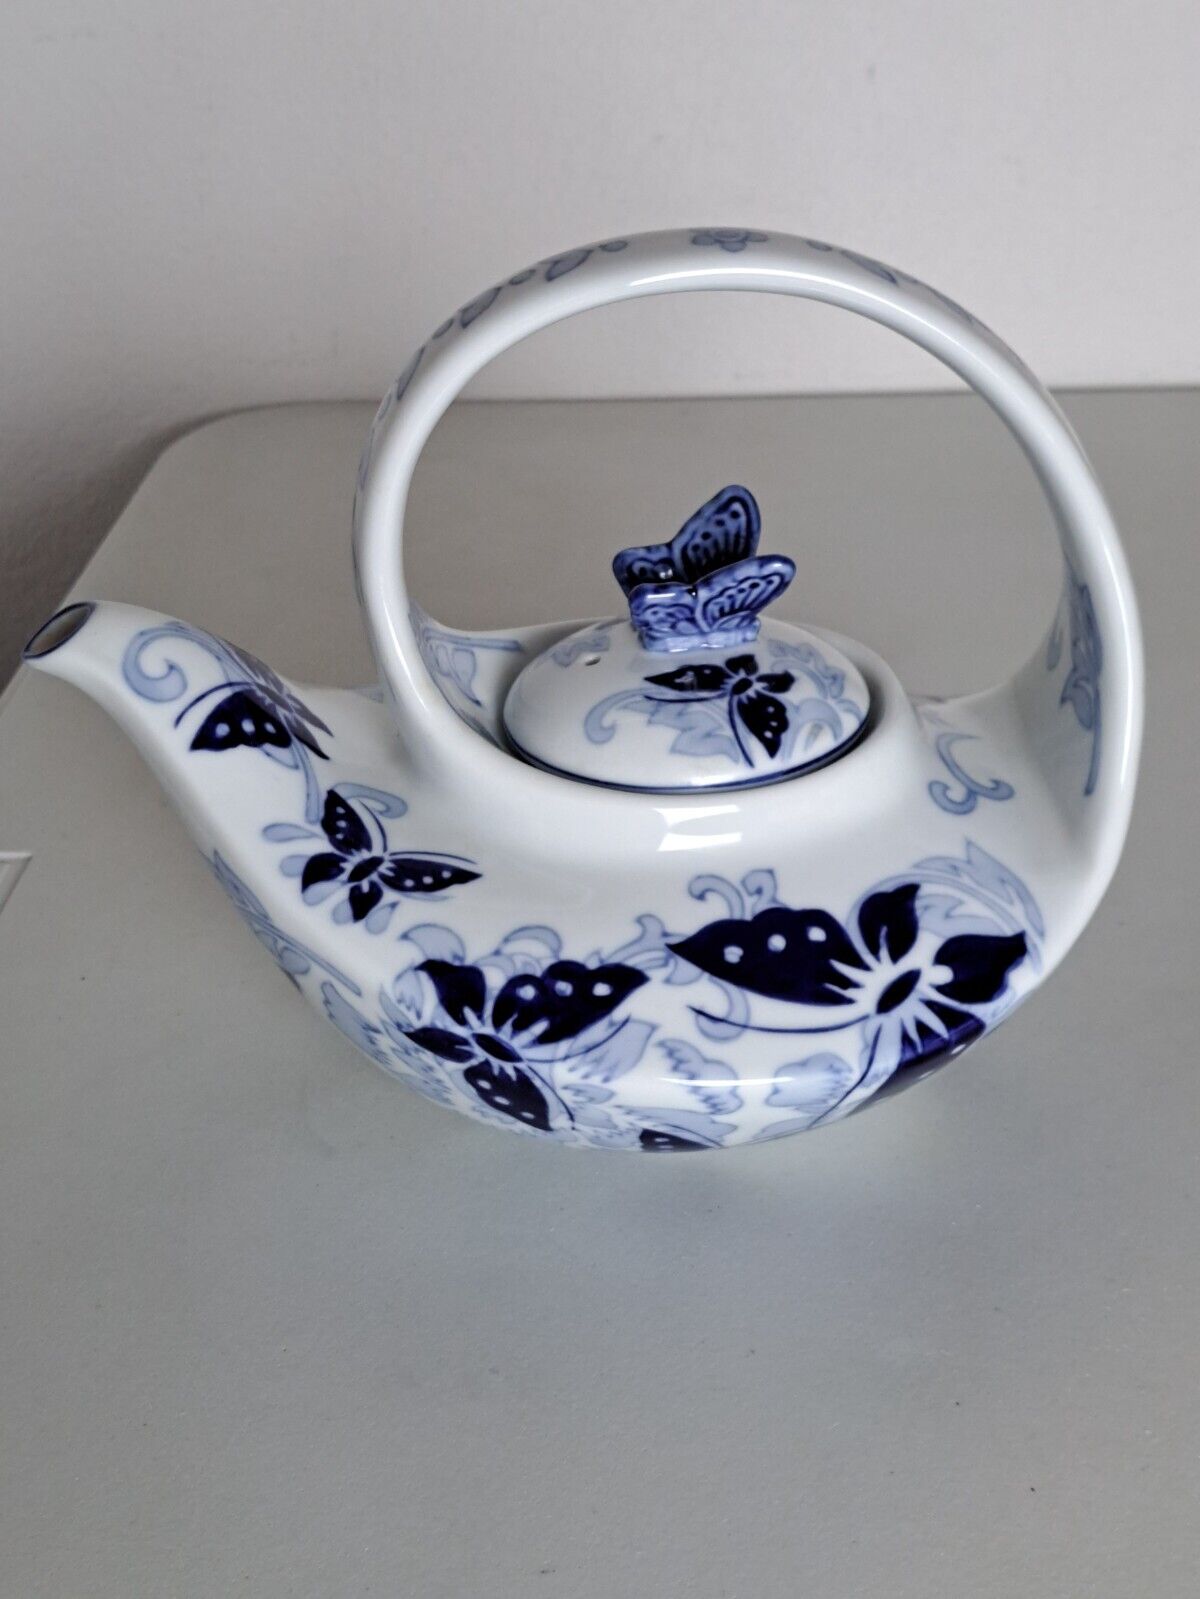 Pier 1 Imports Porcelain White & Blue Butterfly Asian Handle Teapot w/ Lid